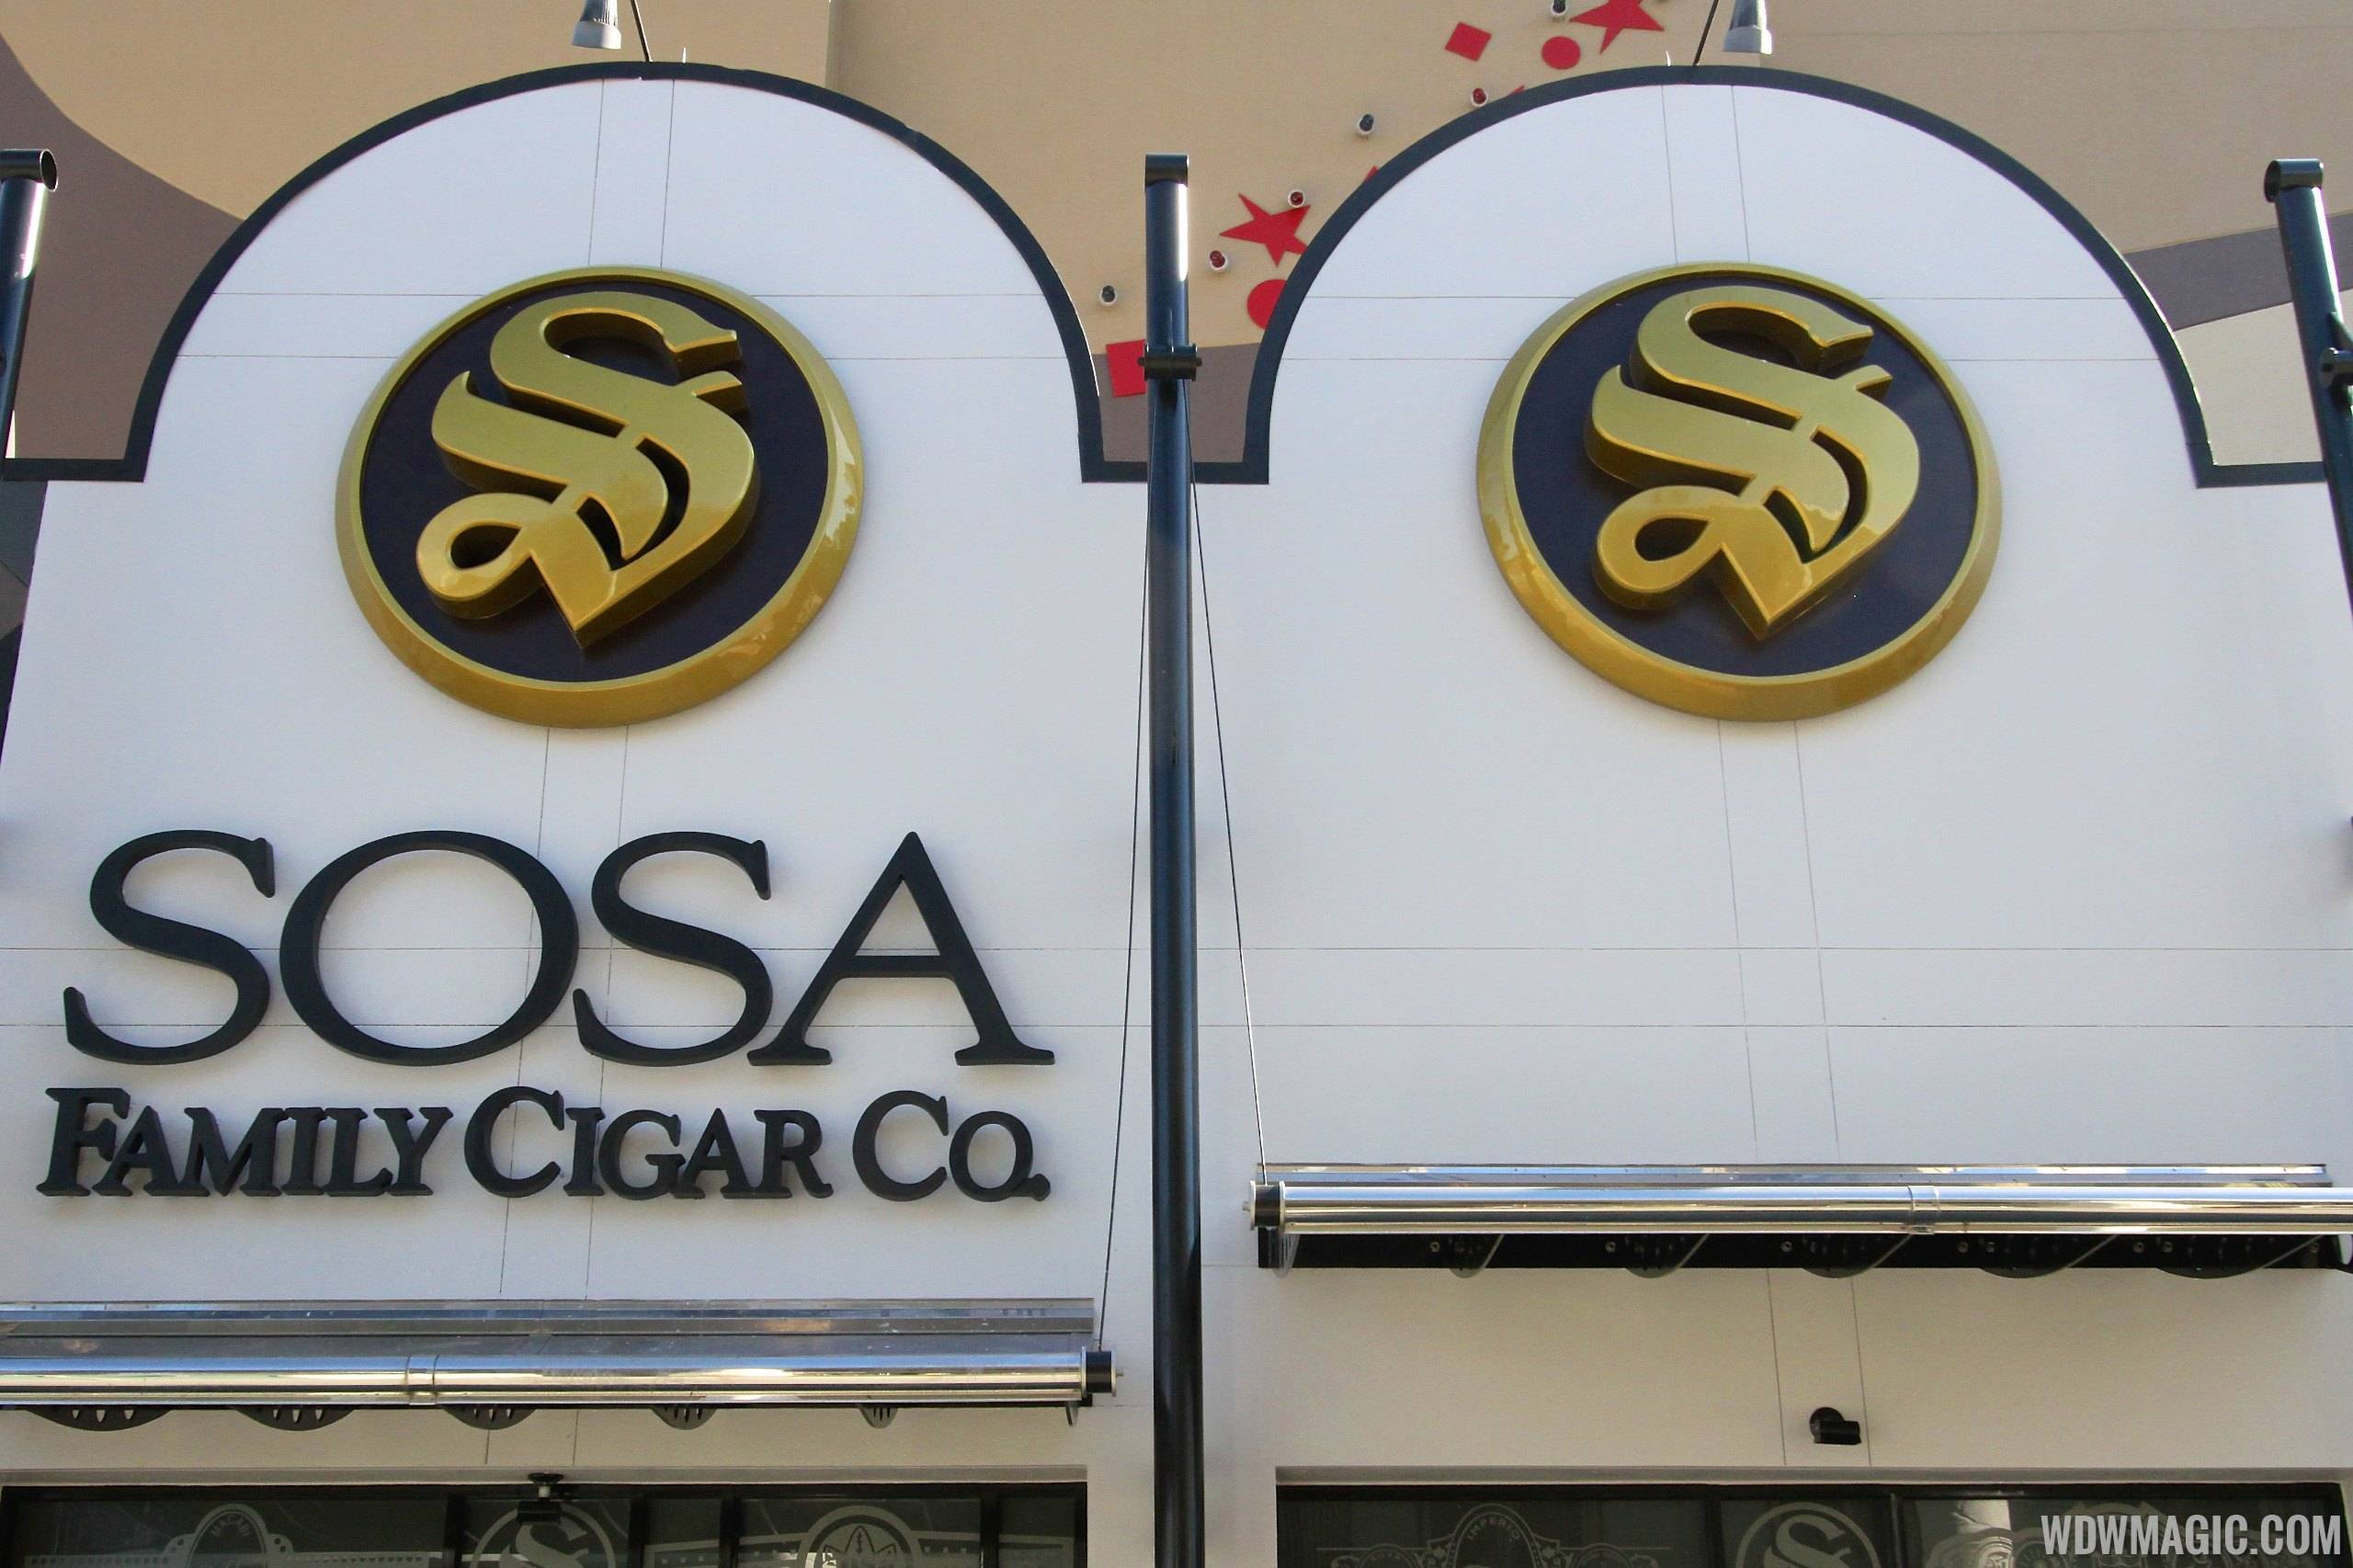 New Disney Springs urban color scheme at Sosa Cigars